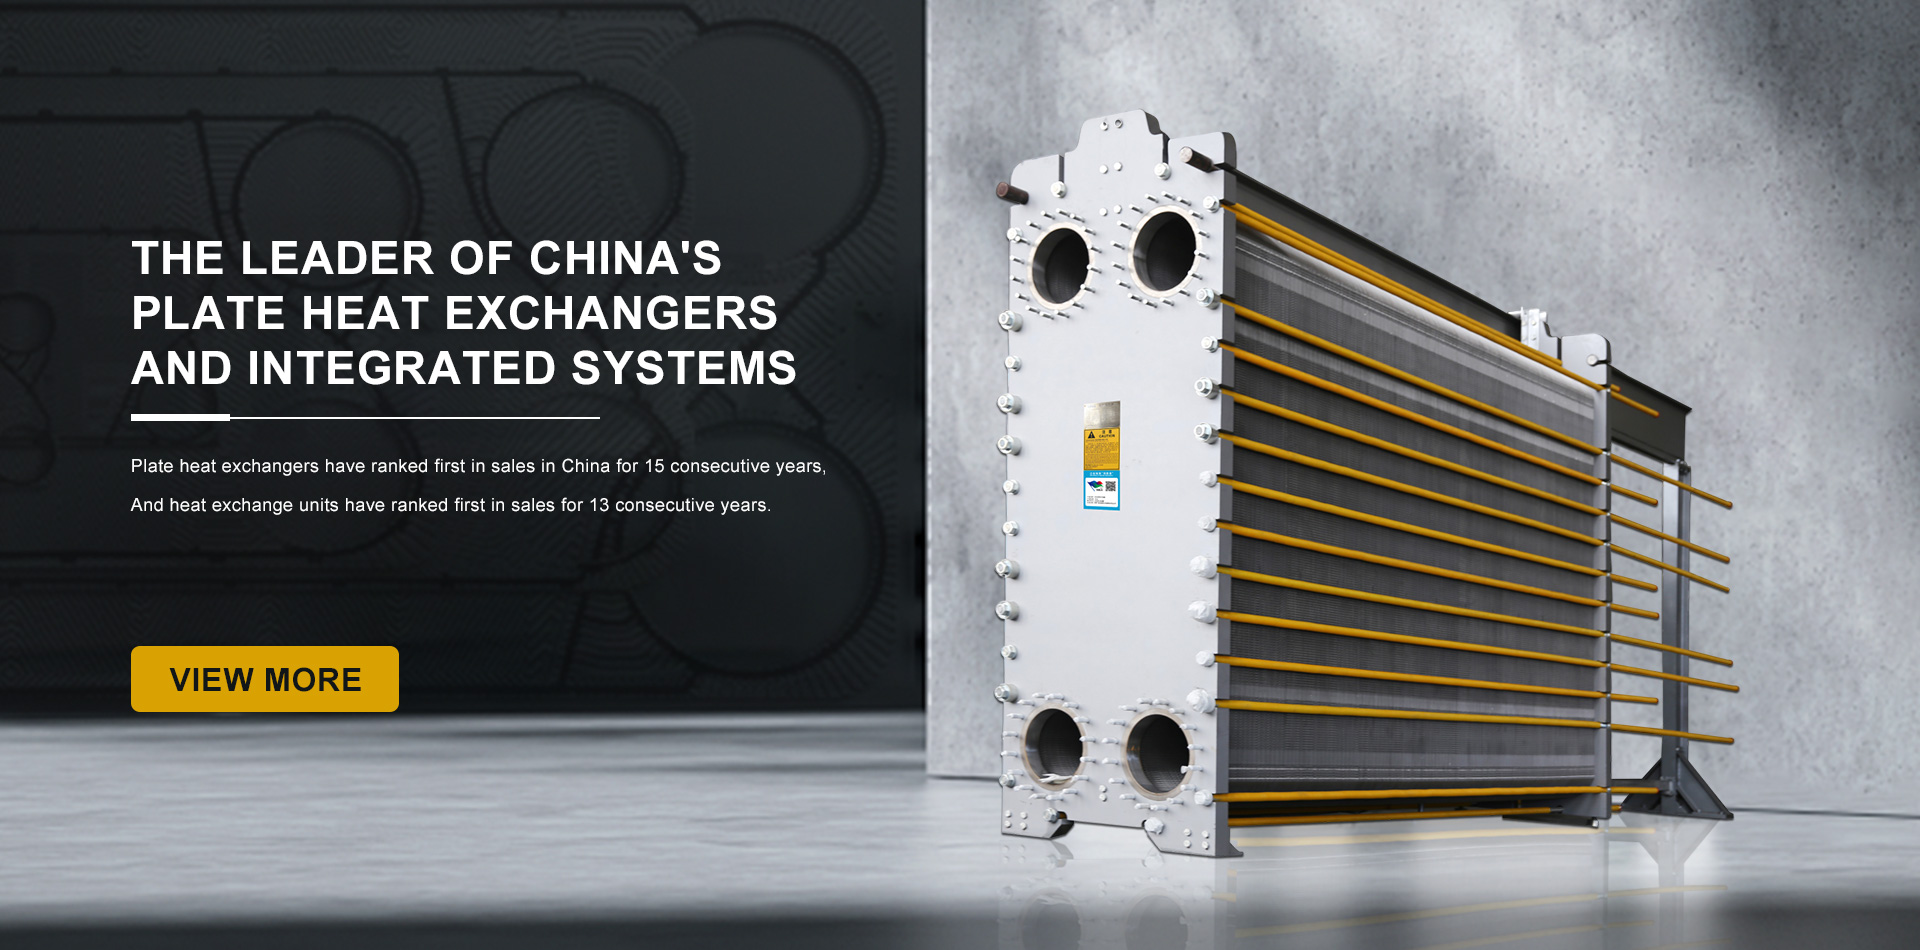 Jilin Tongju Heat Exchange Easy Purchase Platform Co., Ltd